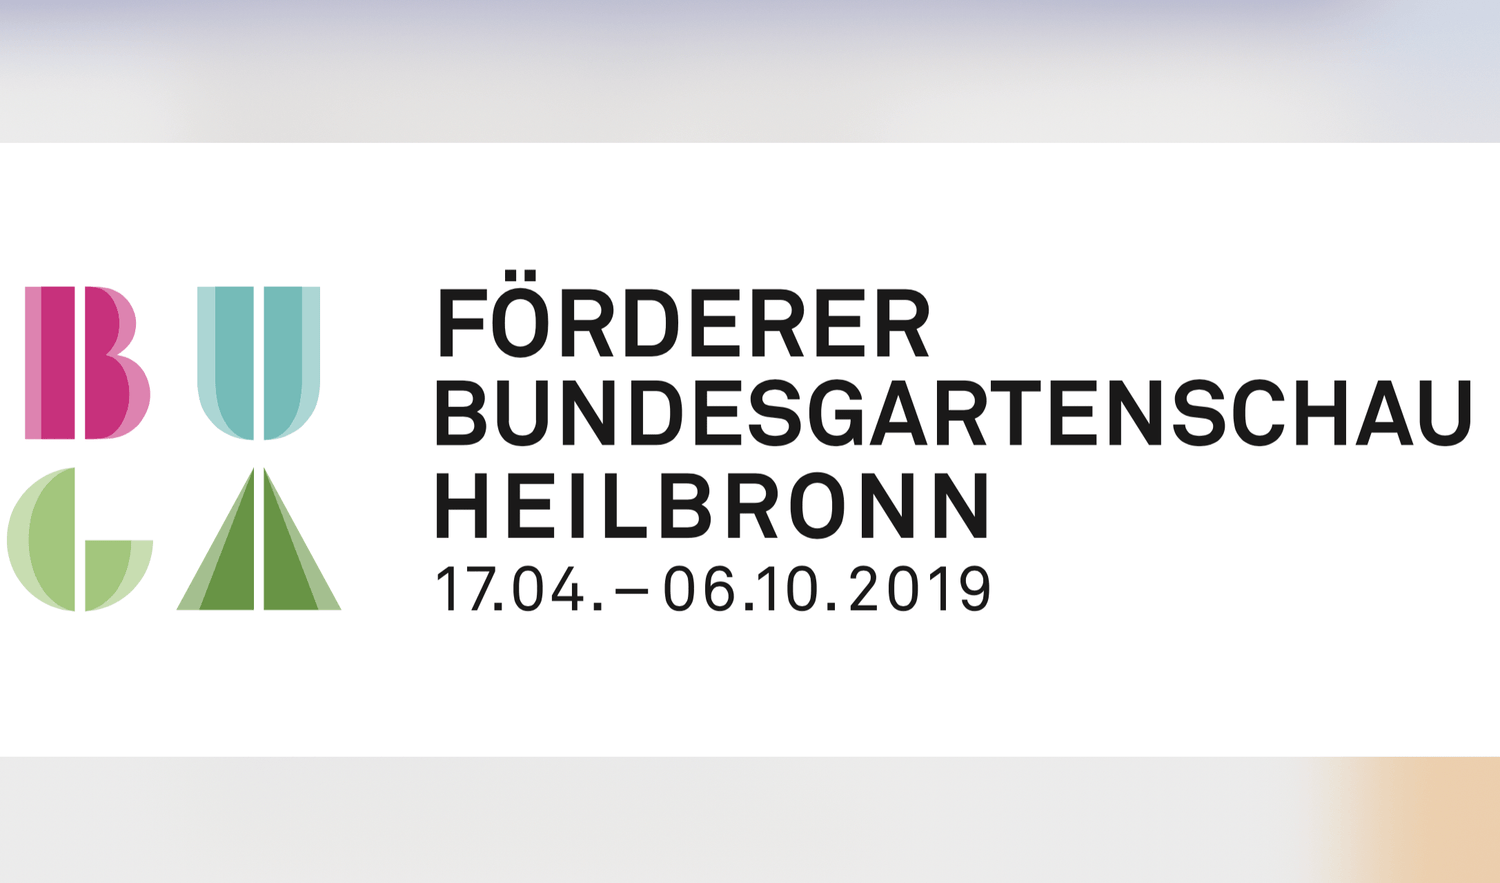 Bundesgartenschau Heilbronn 17.04. bis 06.10.2019